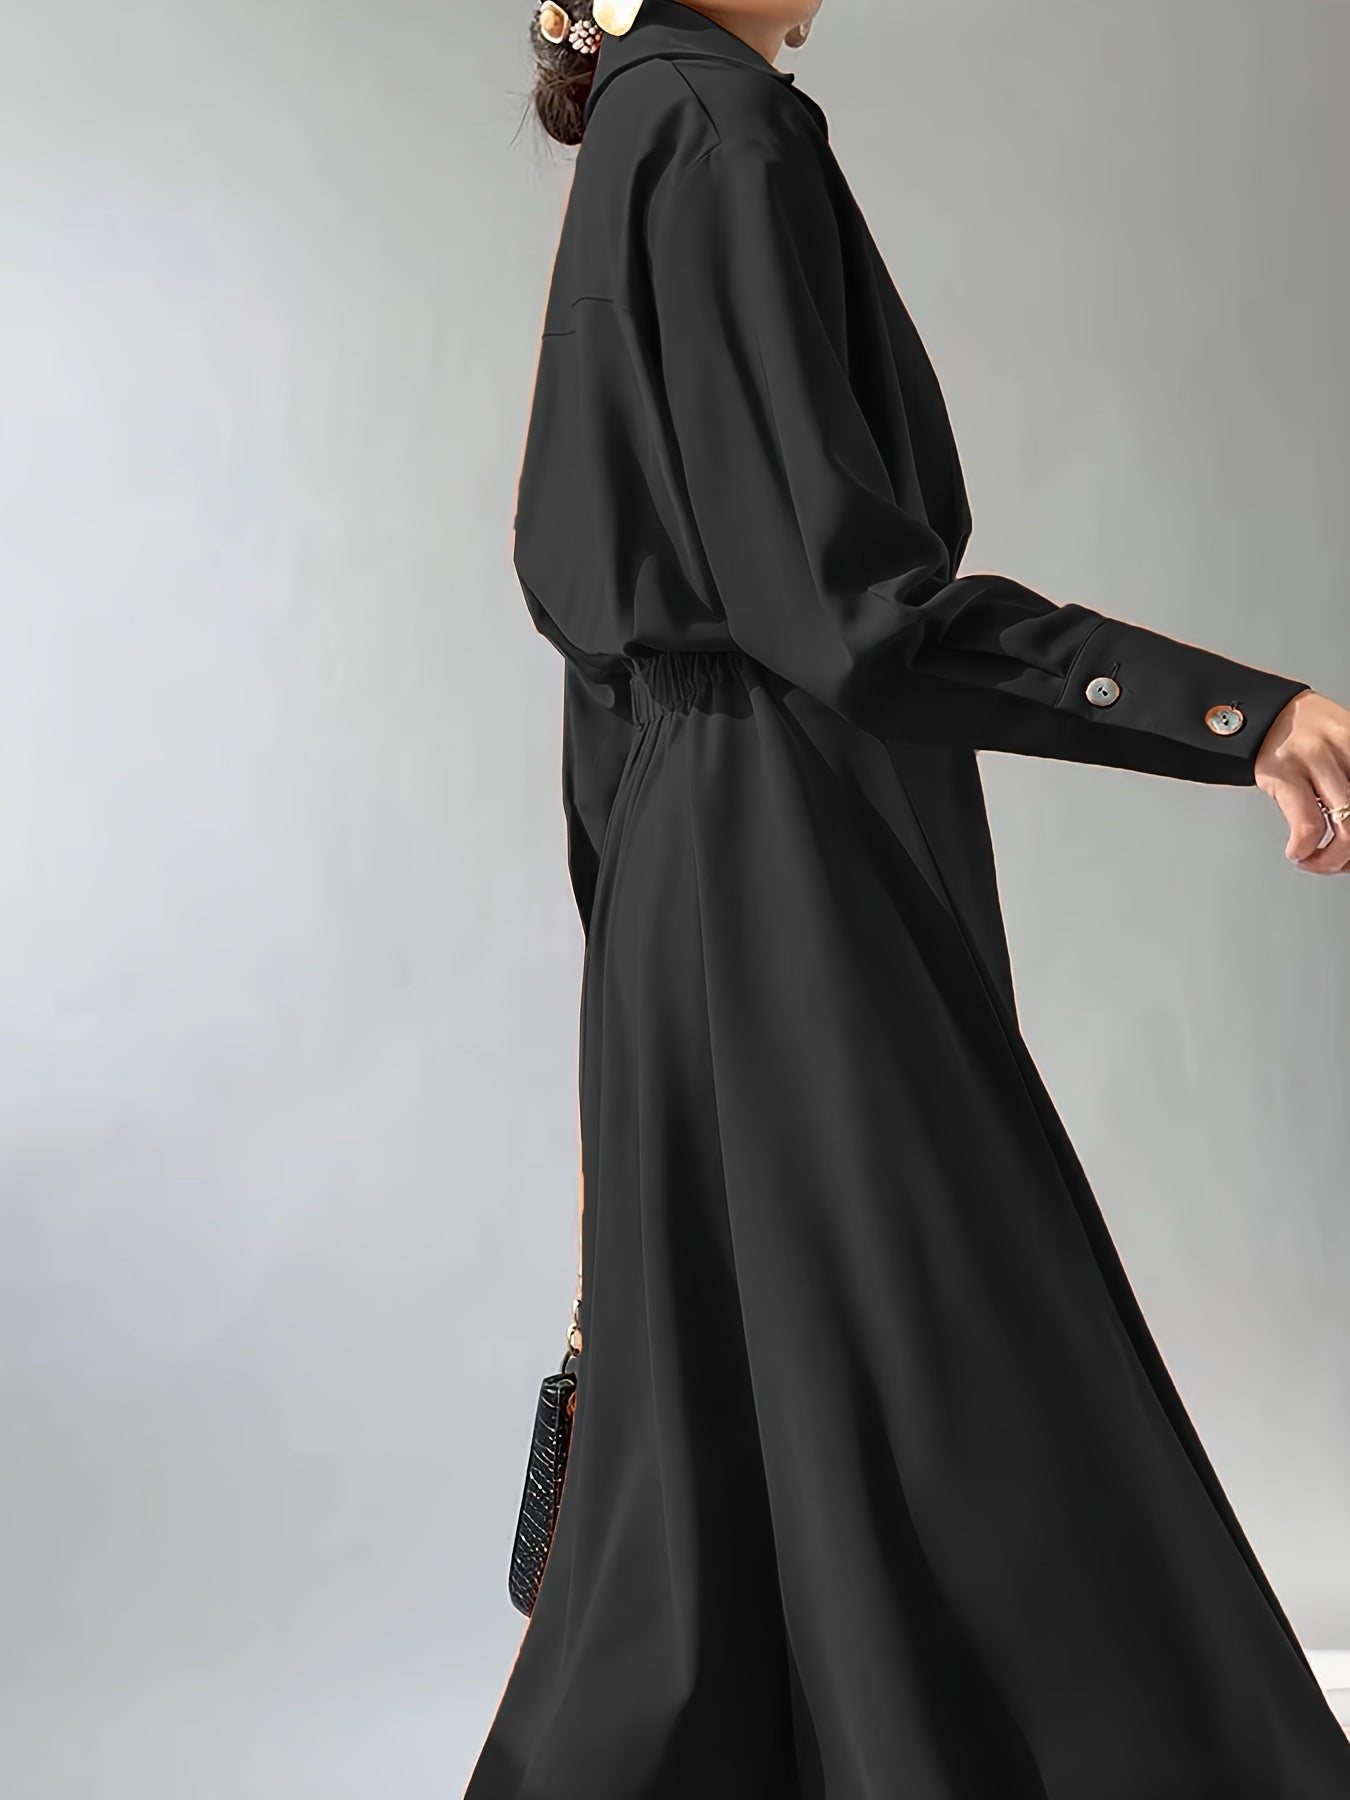 xieyinshe  Solid Waist Lapel Collar Dress, Elegant Long Sleeve Dress For Spring & Fall, Women's Clothing